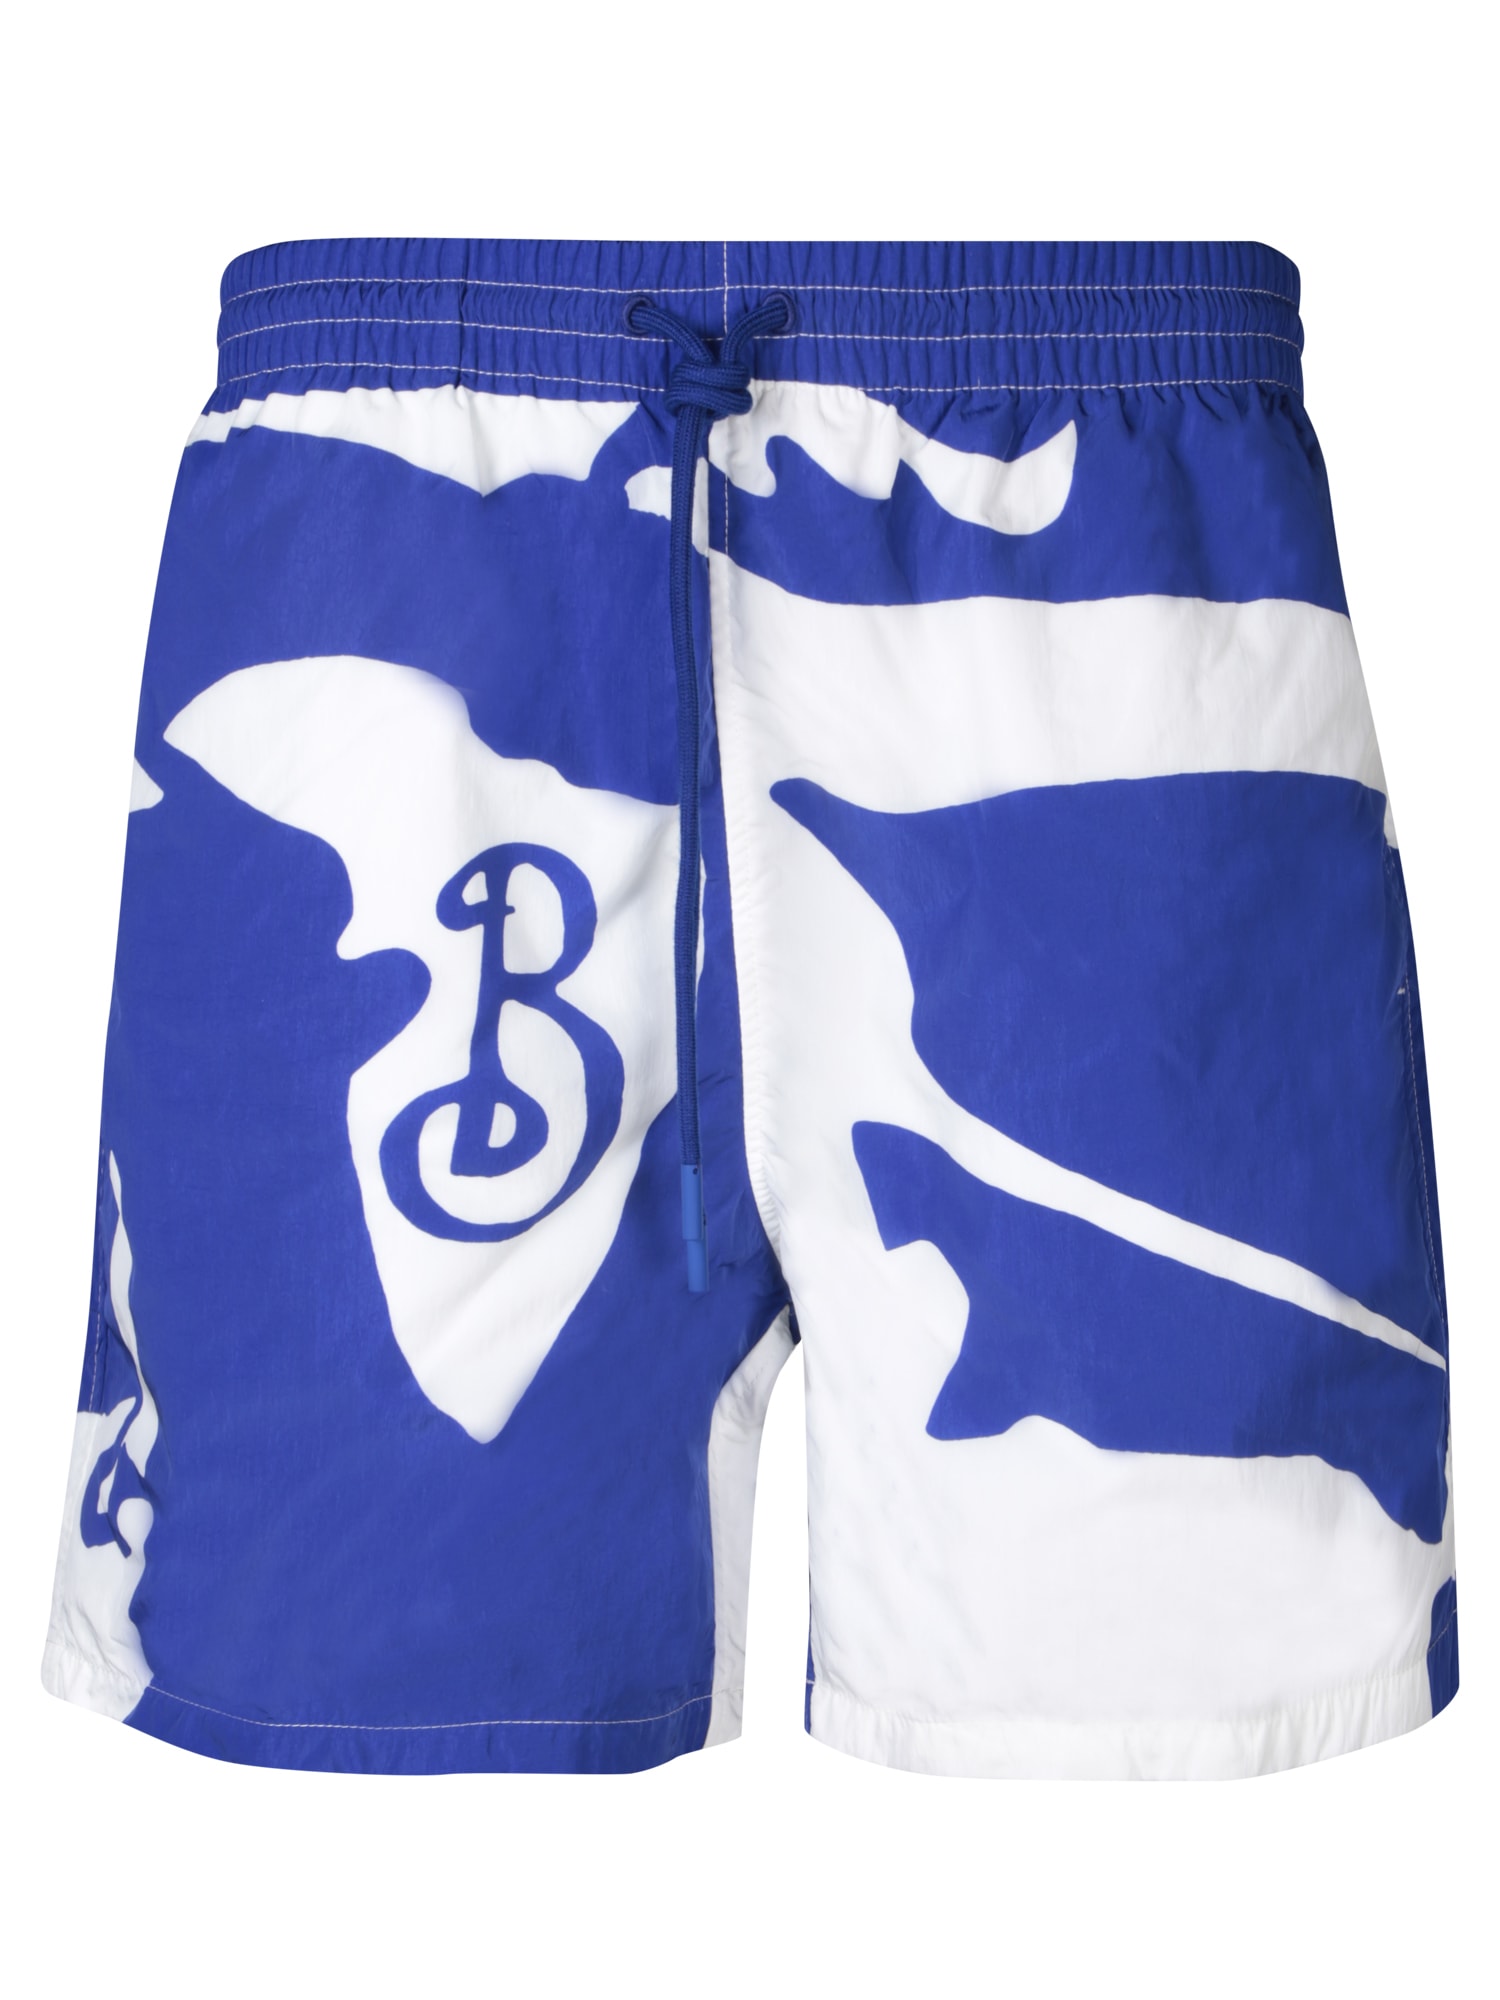 Blue And White Swim Shorts